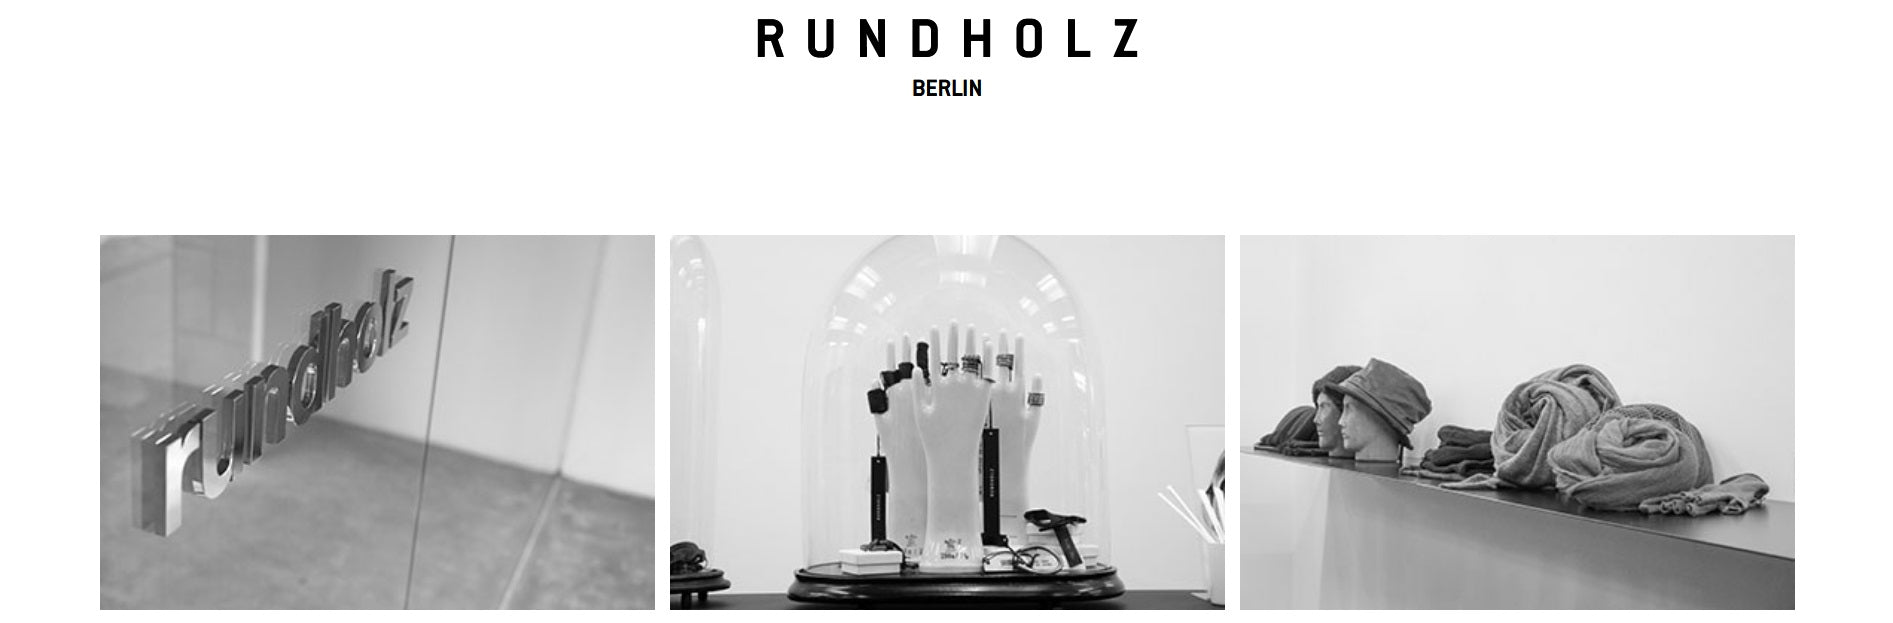 RUNDHOLZ-STORE-BERLIN